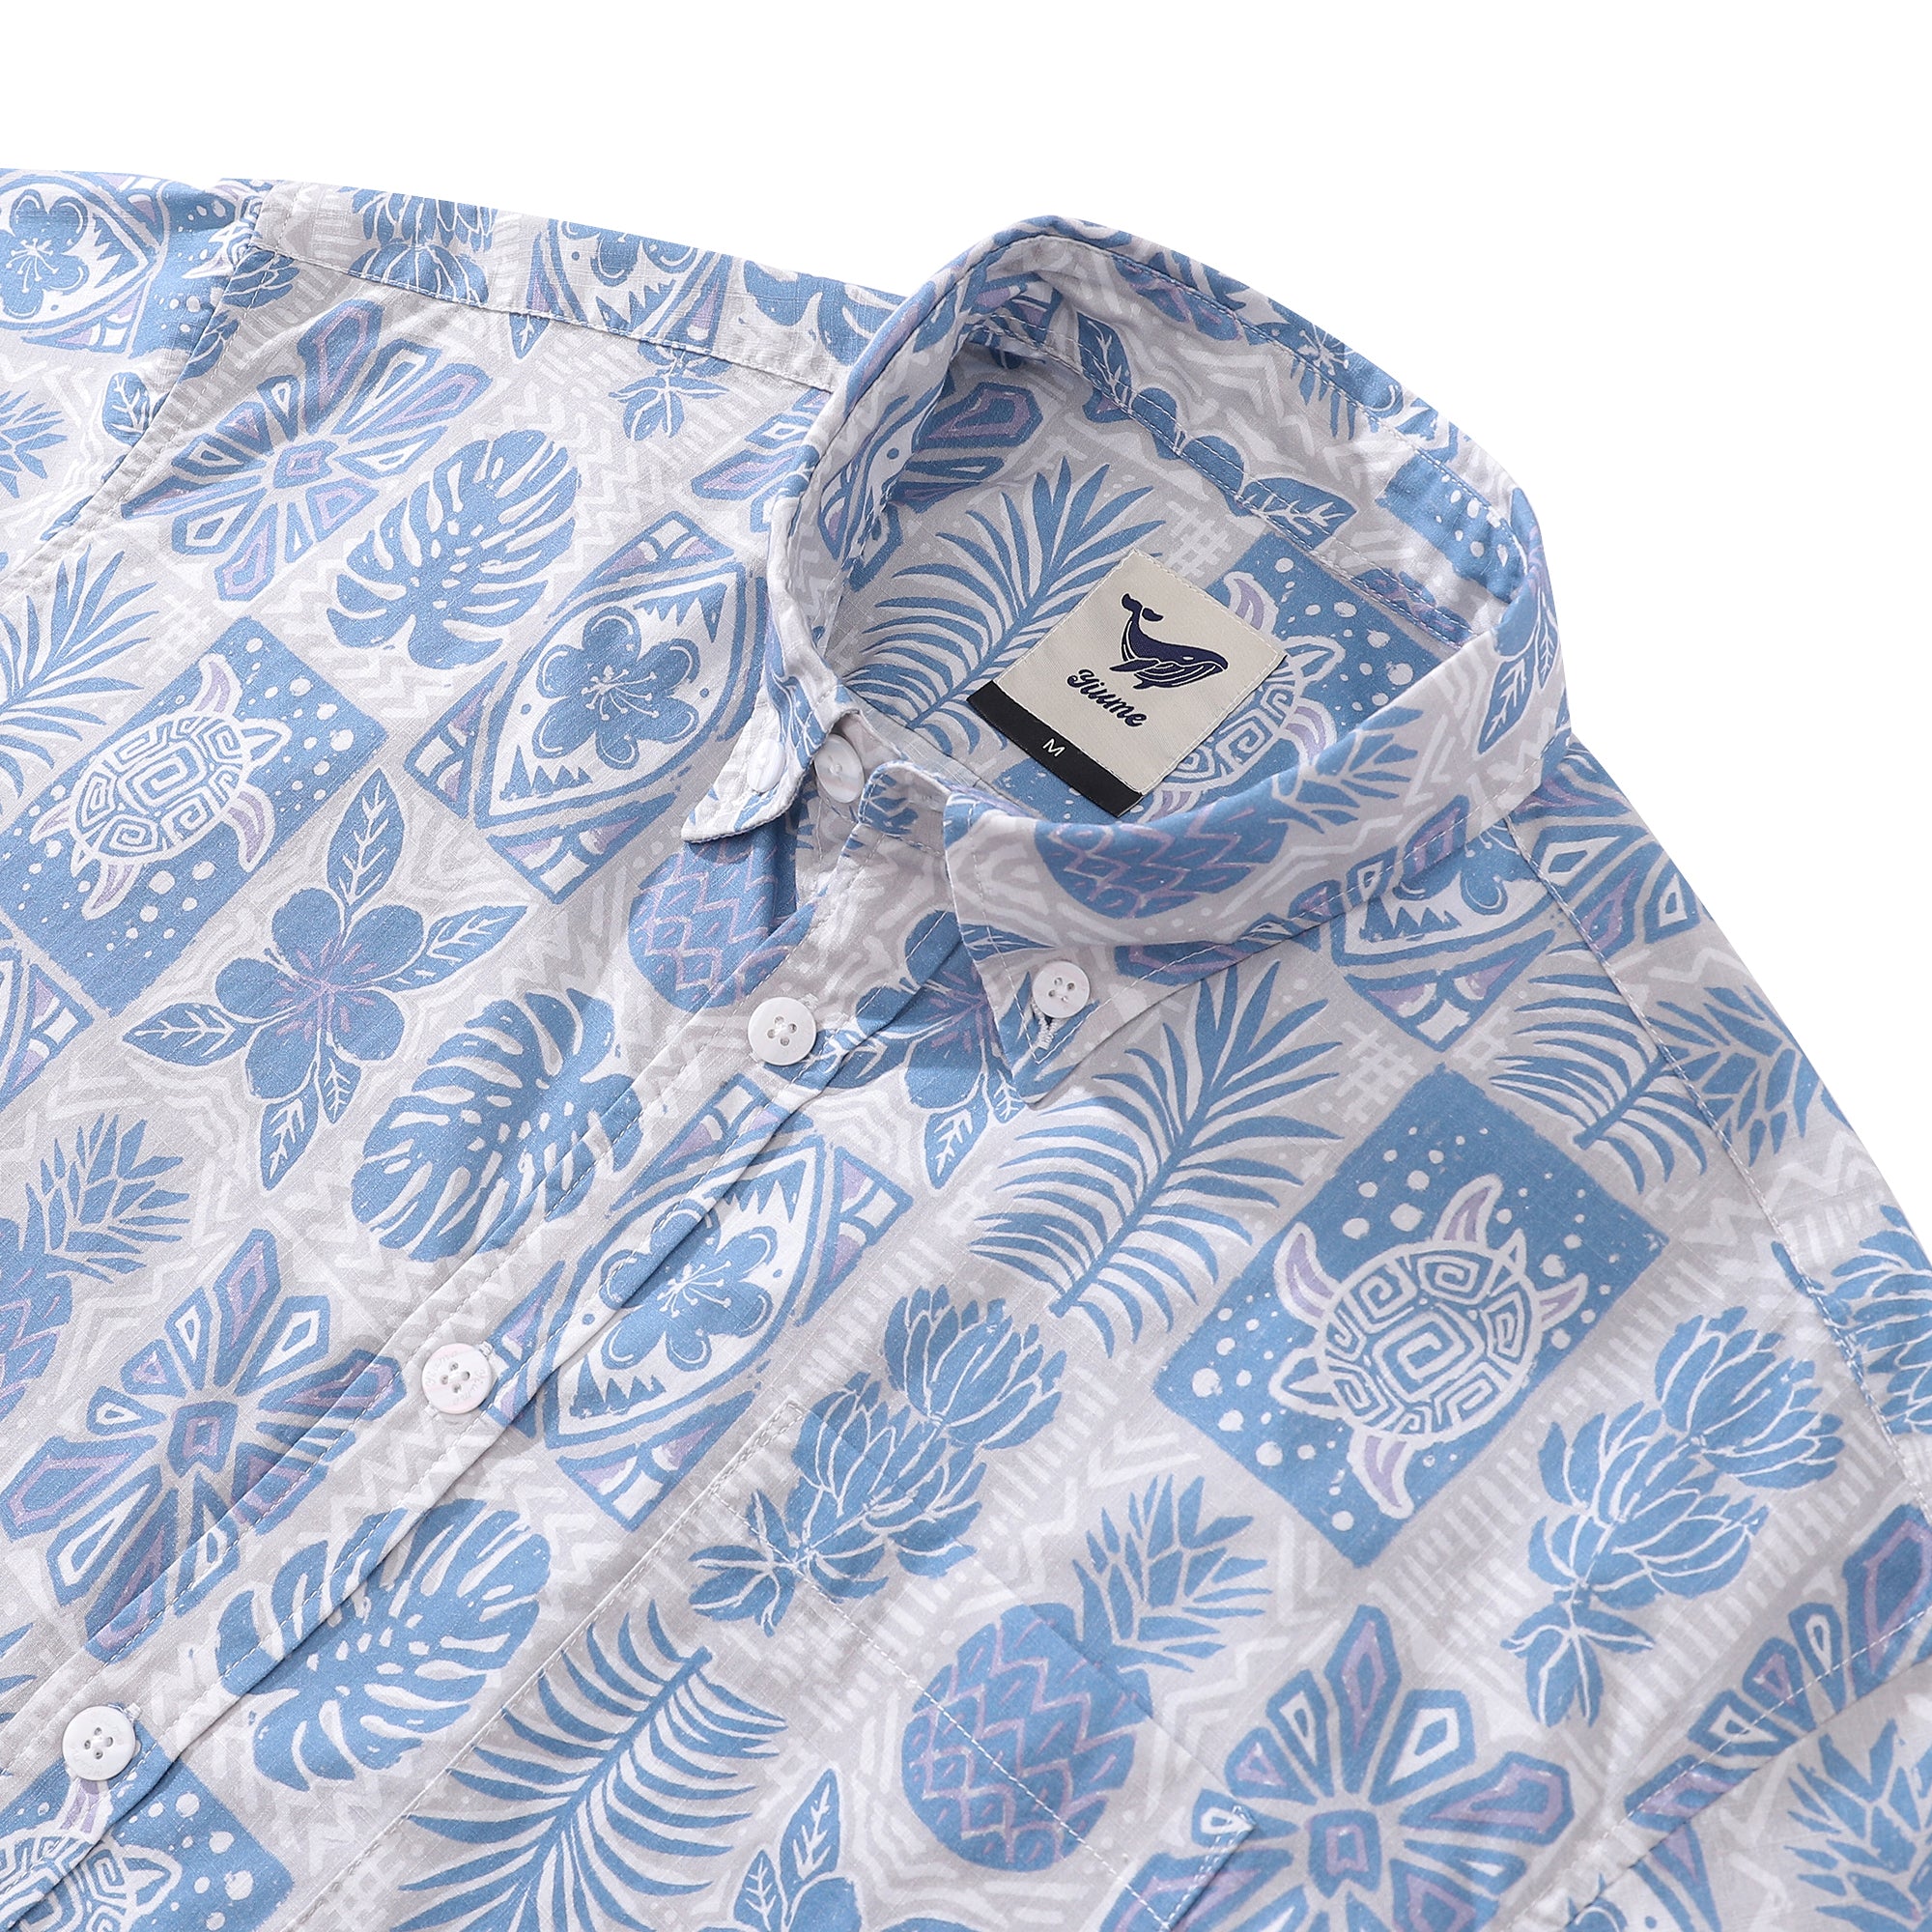 Men's Hawaiian Shirt Plant Totem Print Cotton Button-down Short Sleeve Aloha Shirt